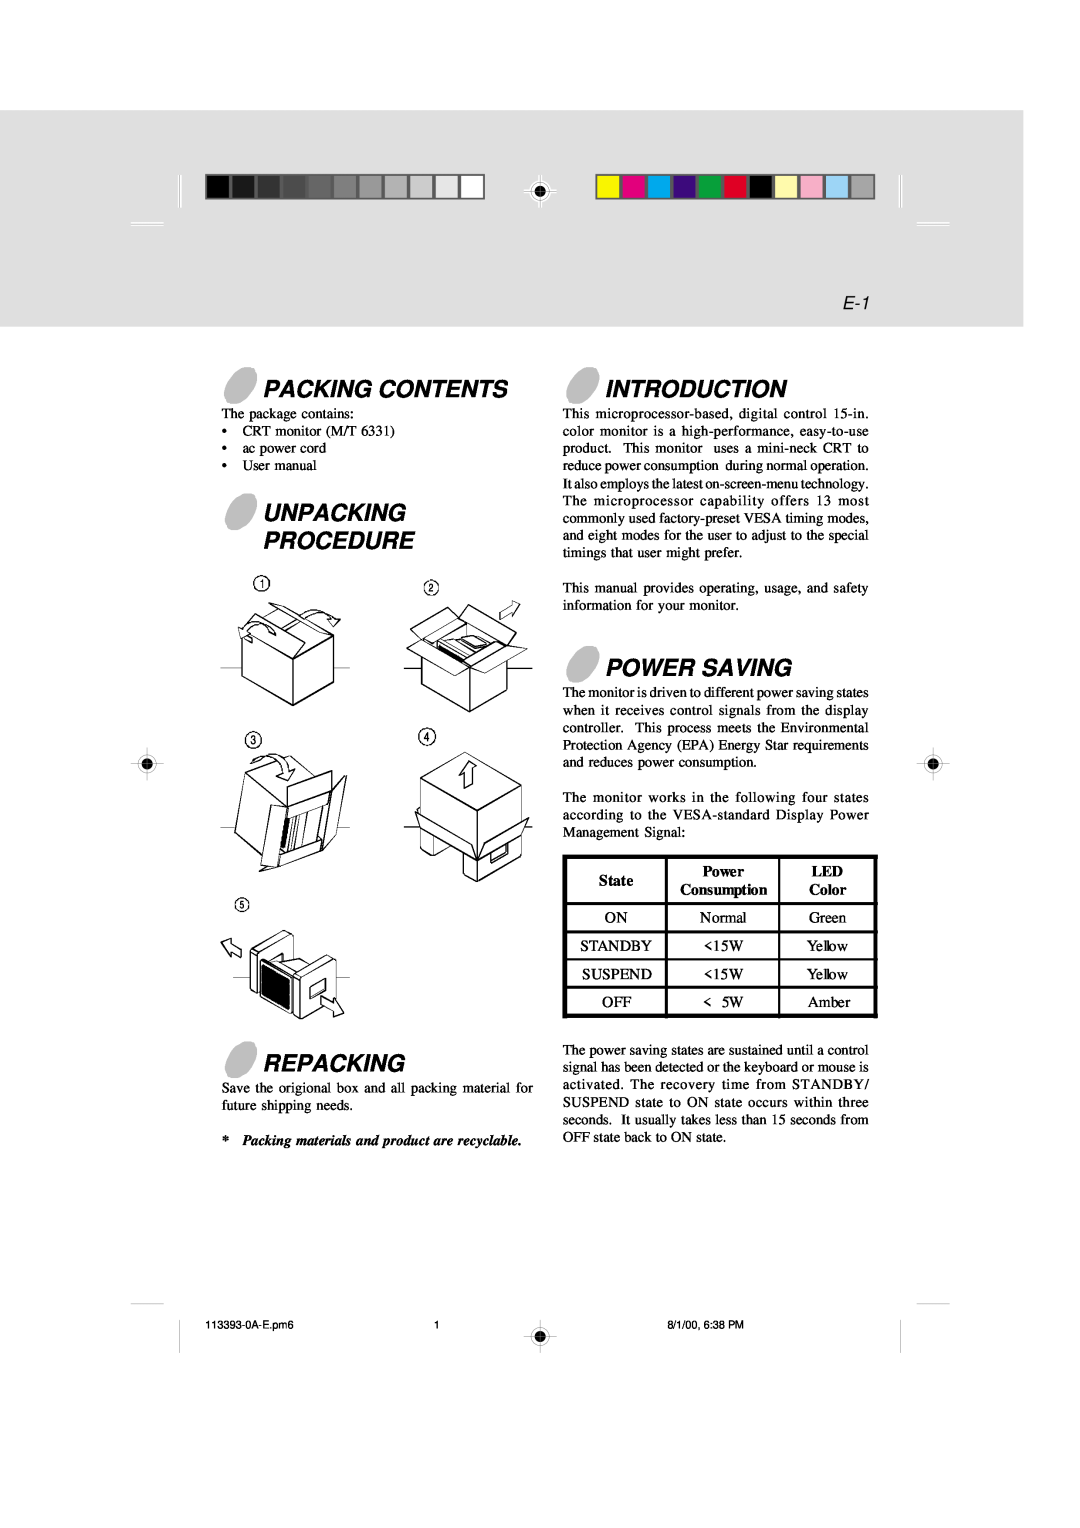 IBM 6331 user manual Packing Contents, Unpacking Procedure, Introduction, Repacking, Power Saving, State 